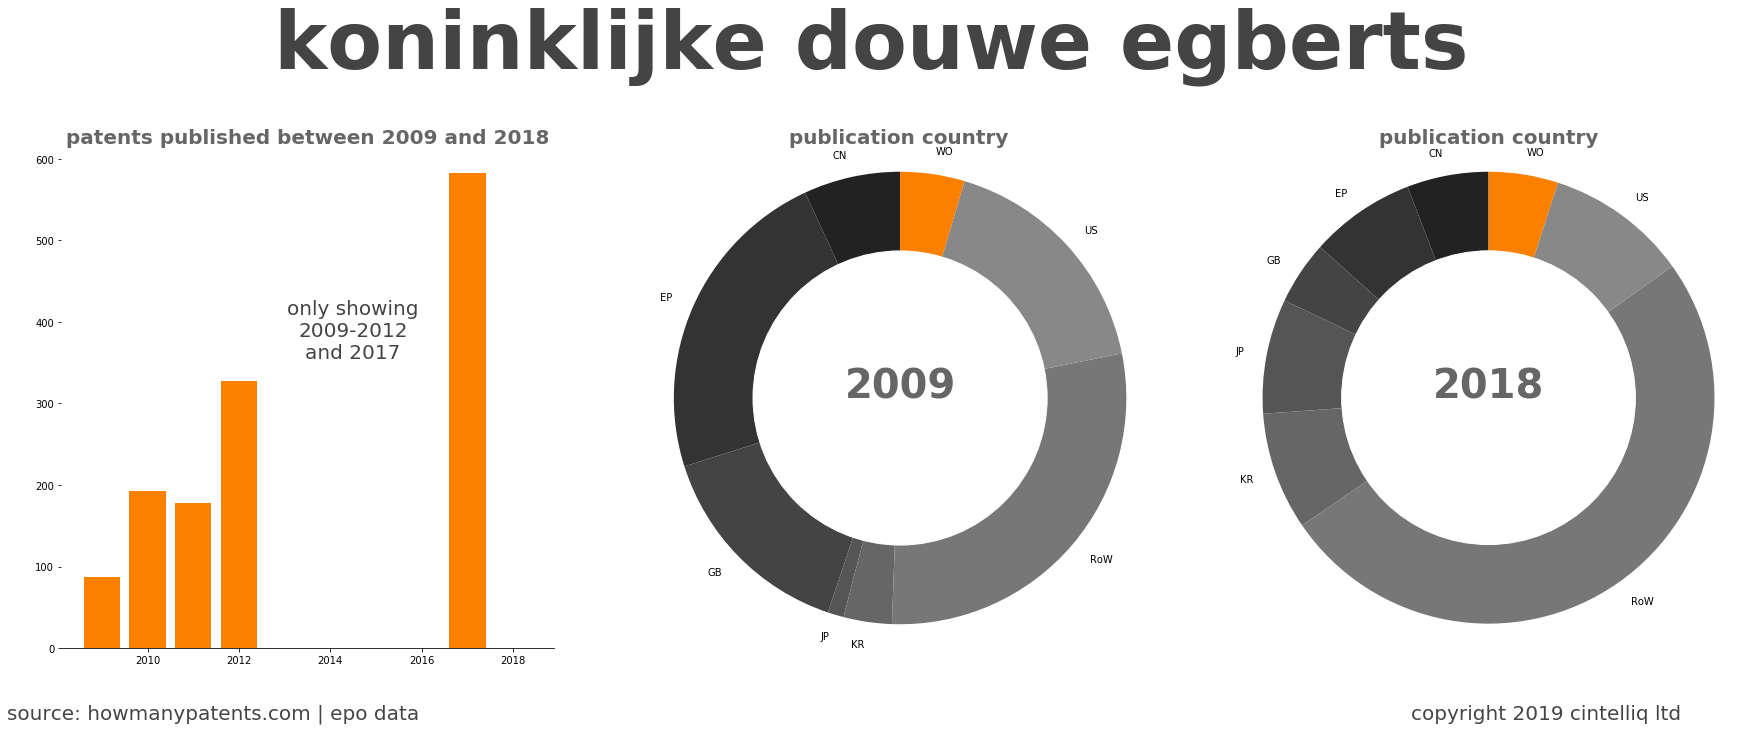 summary of patents for Koninklijke Douwe Egberts